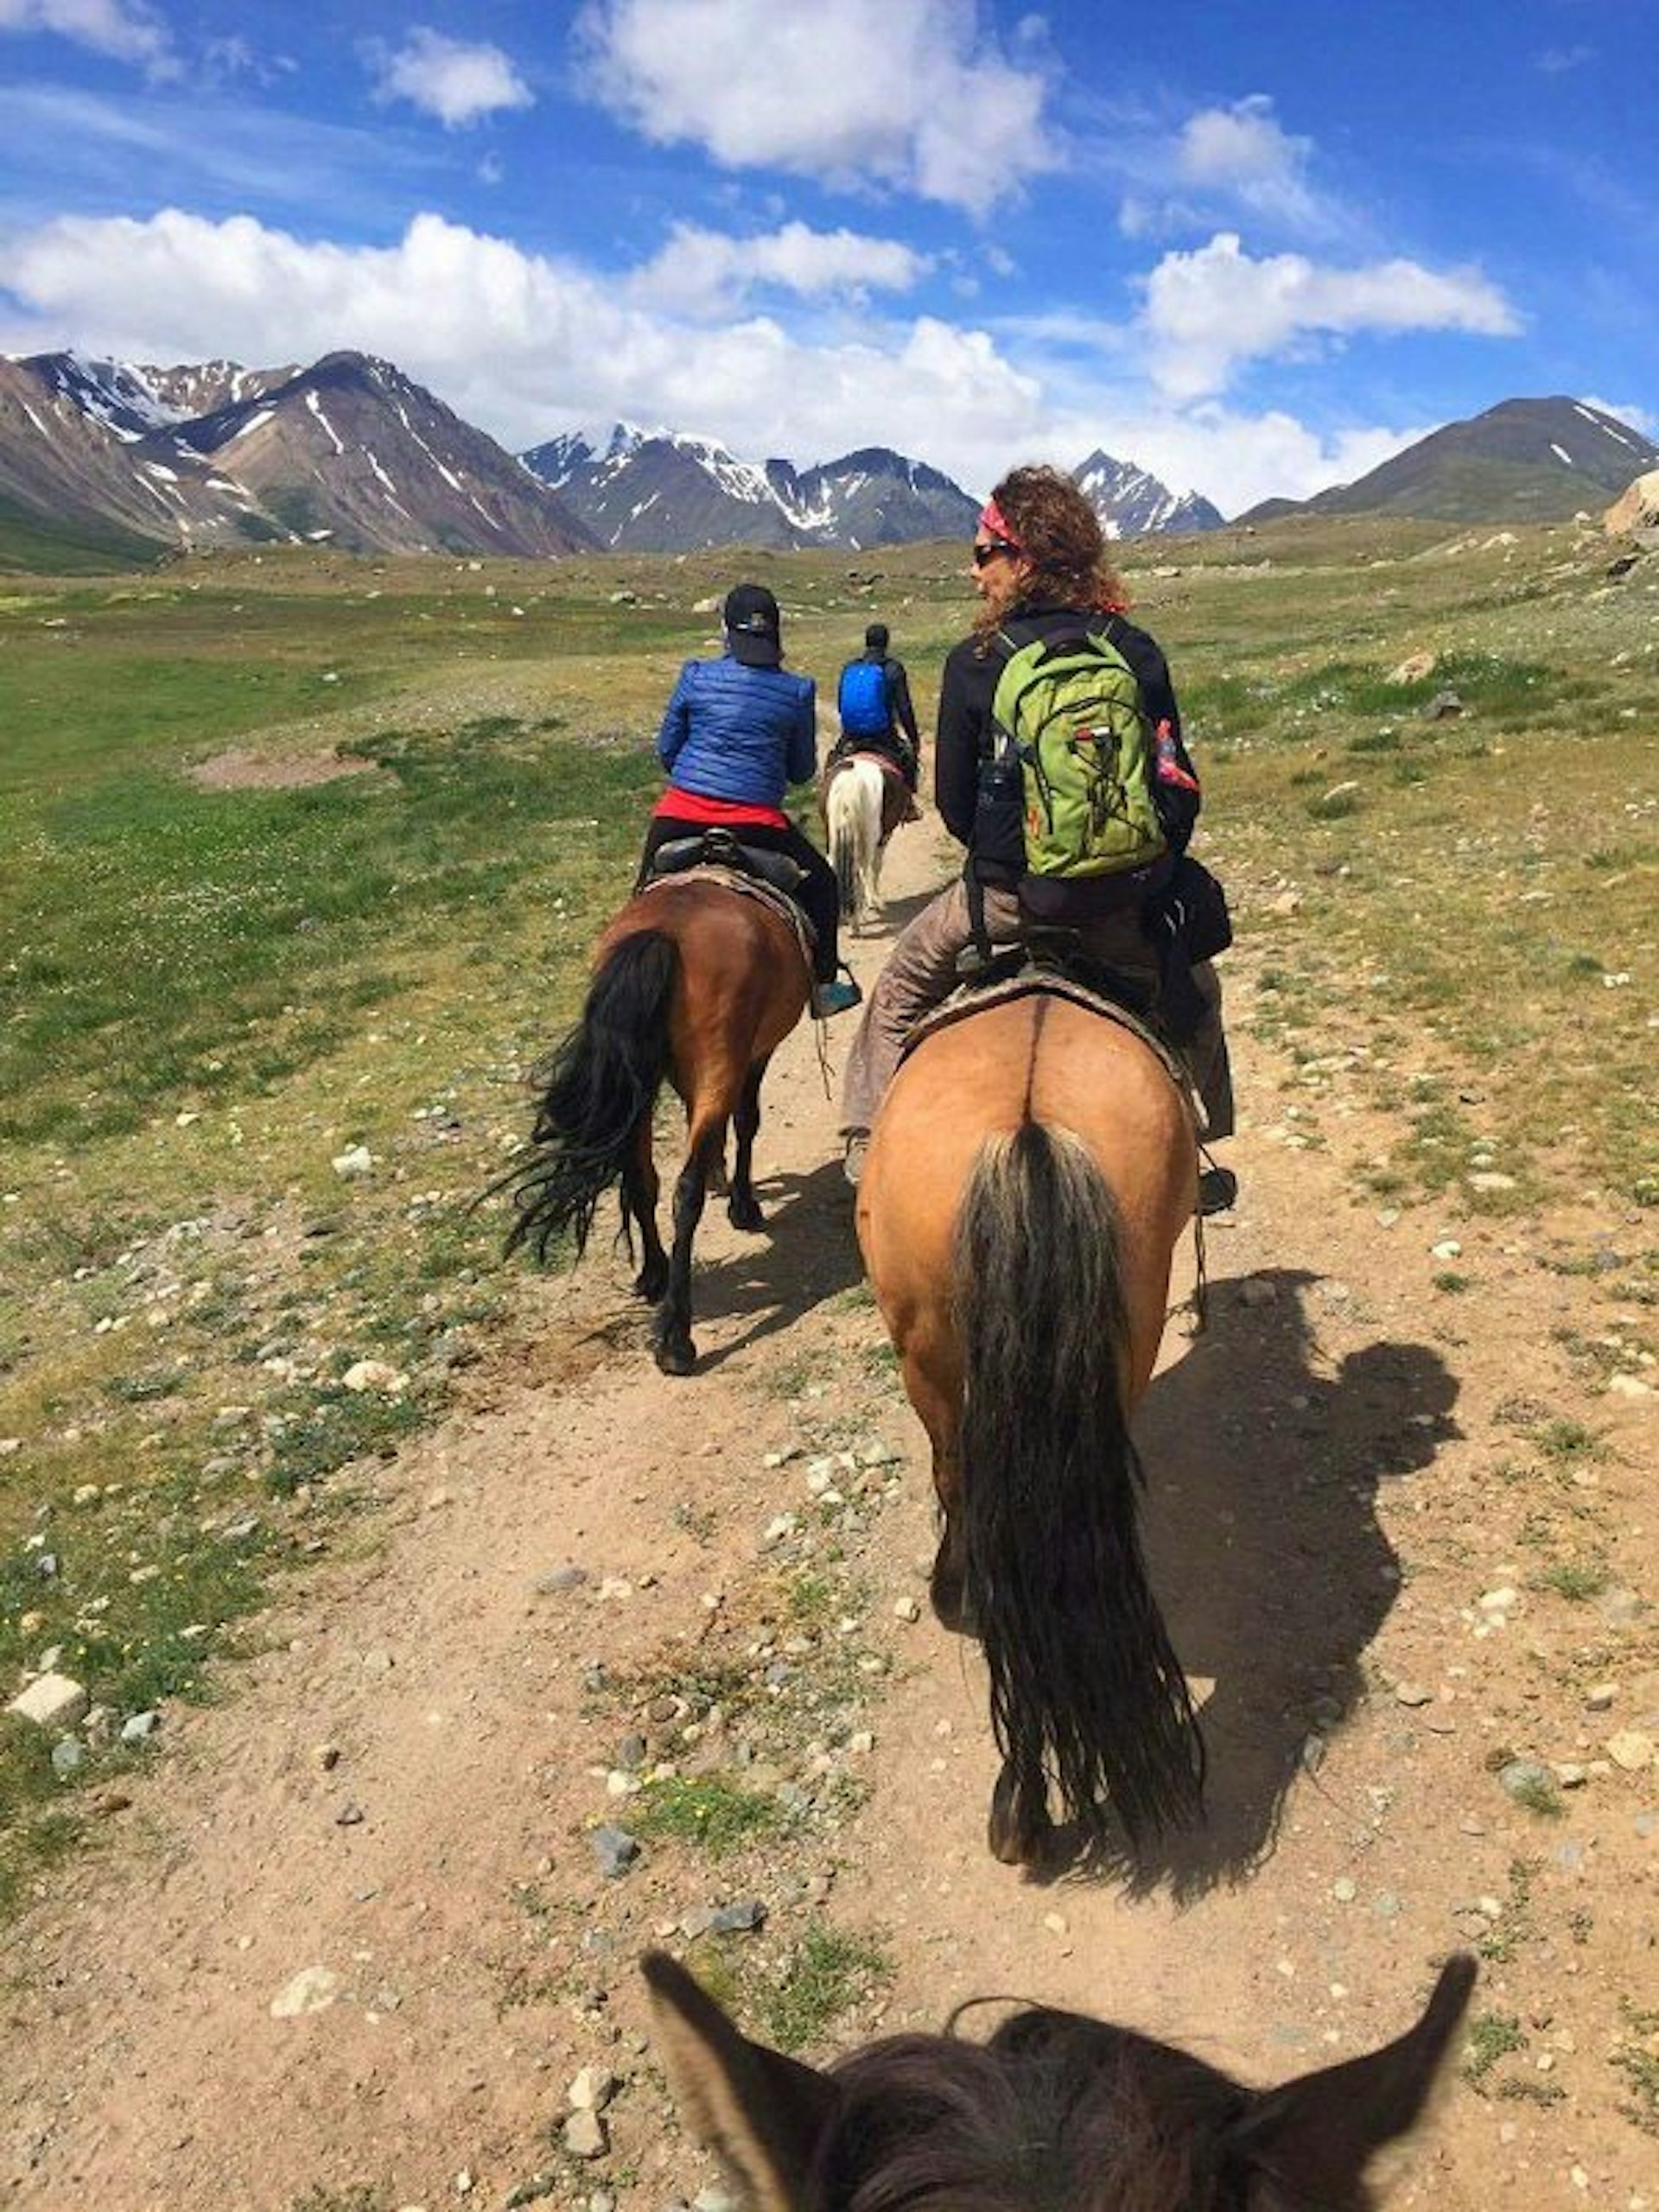 Trekking Tavan Bogd on horseback © Olivia Pozzan / Lonely Planet